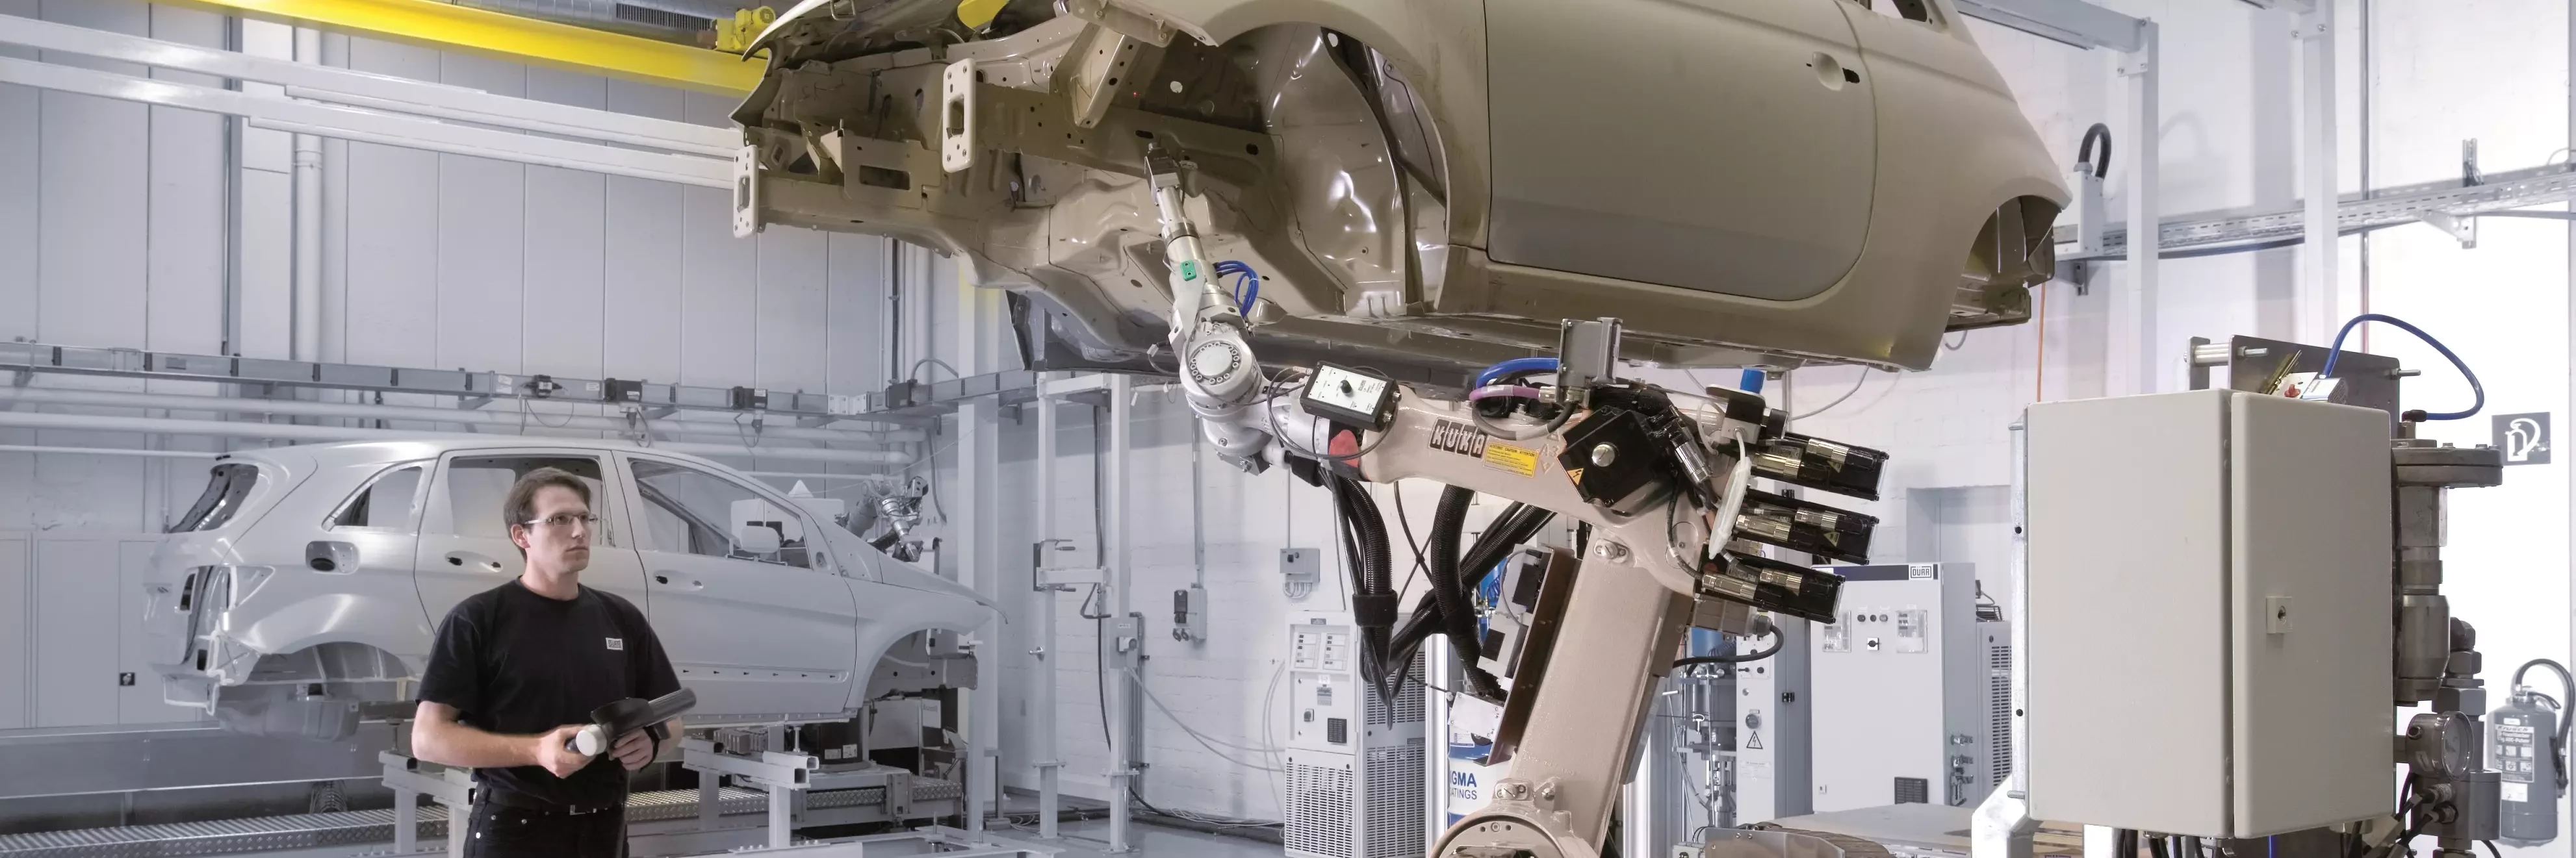 Man controls robot that lifts car body